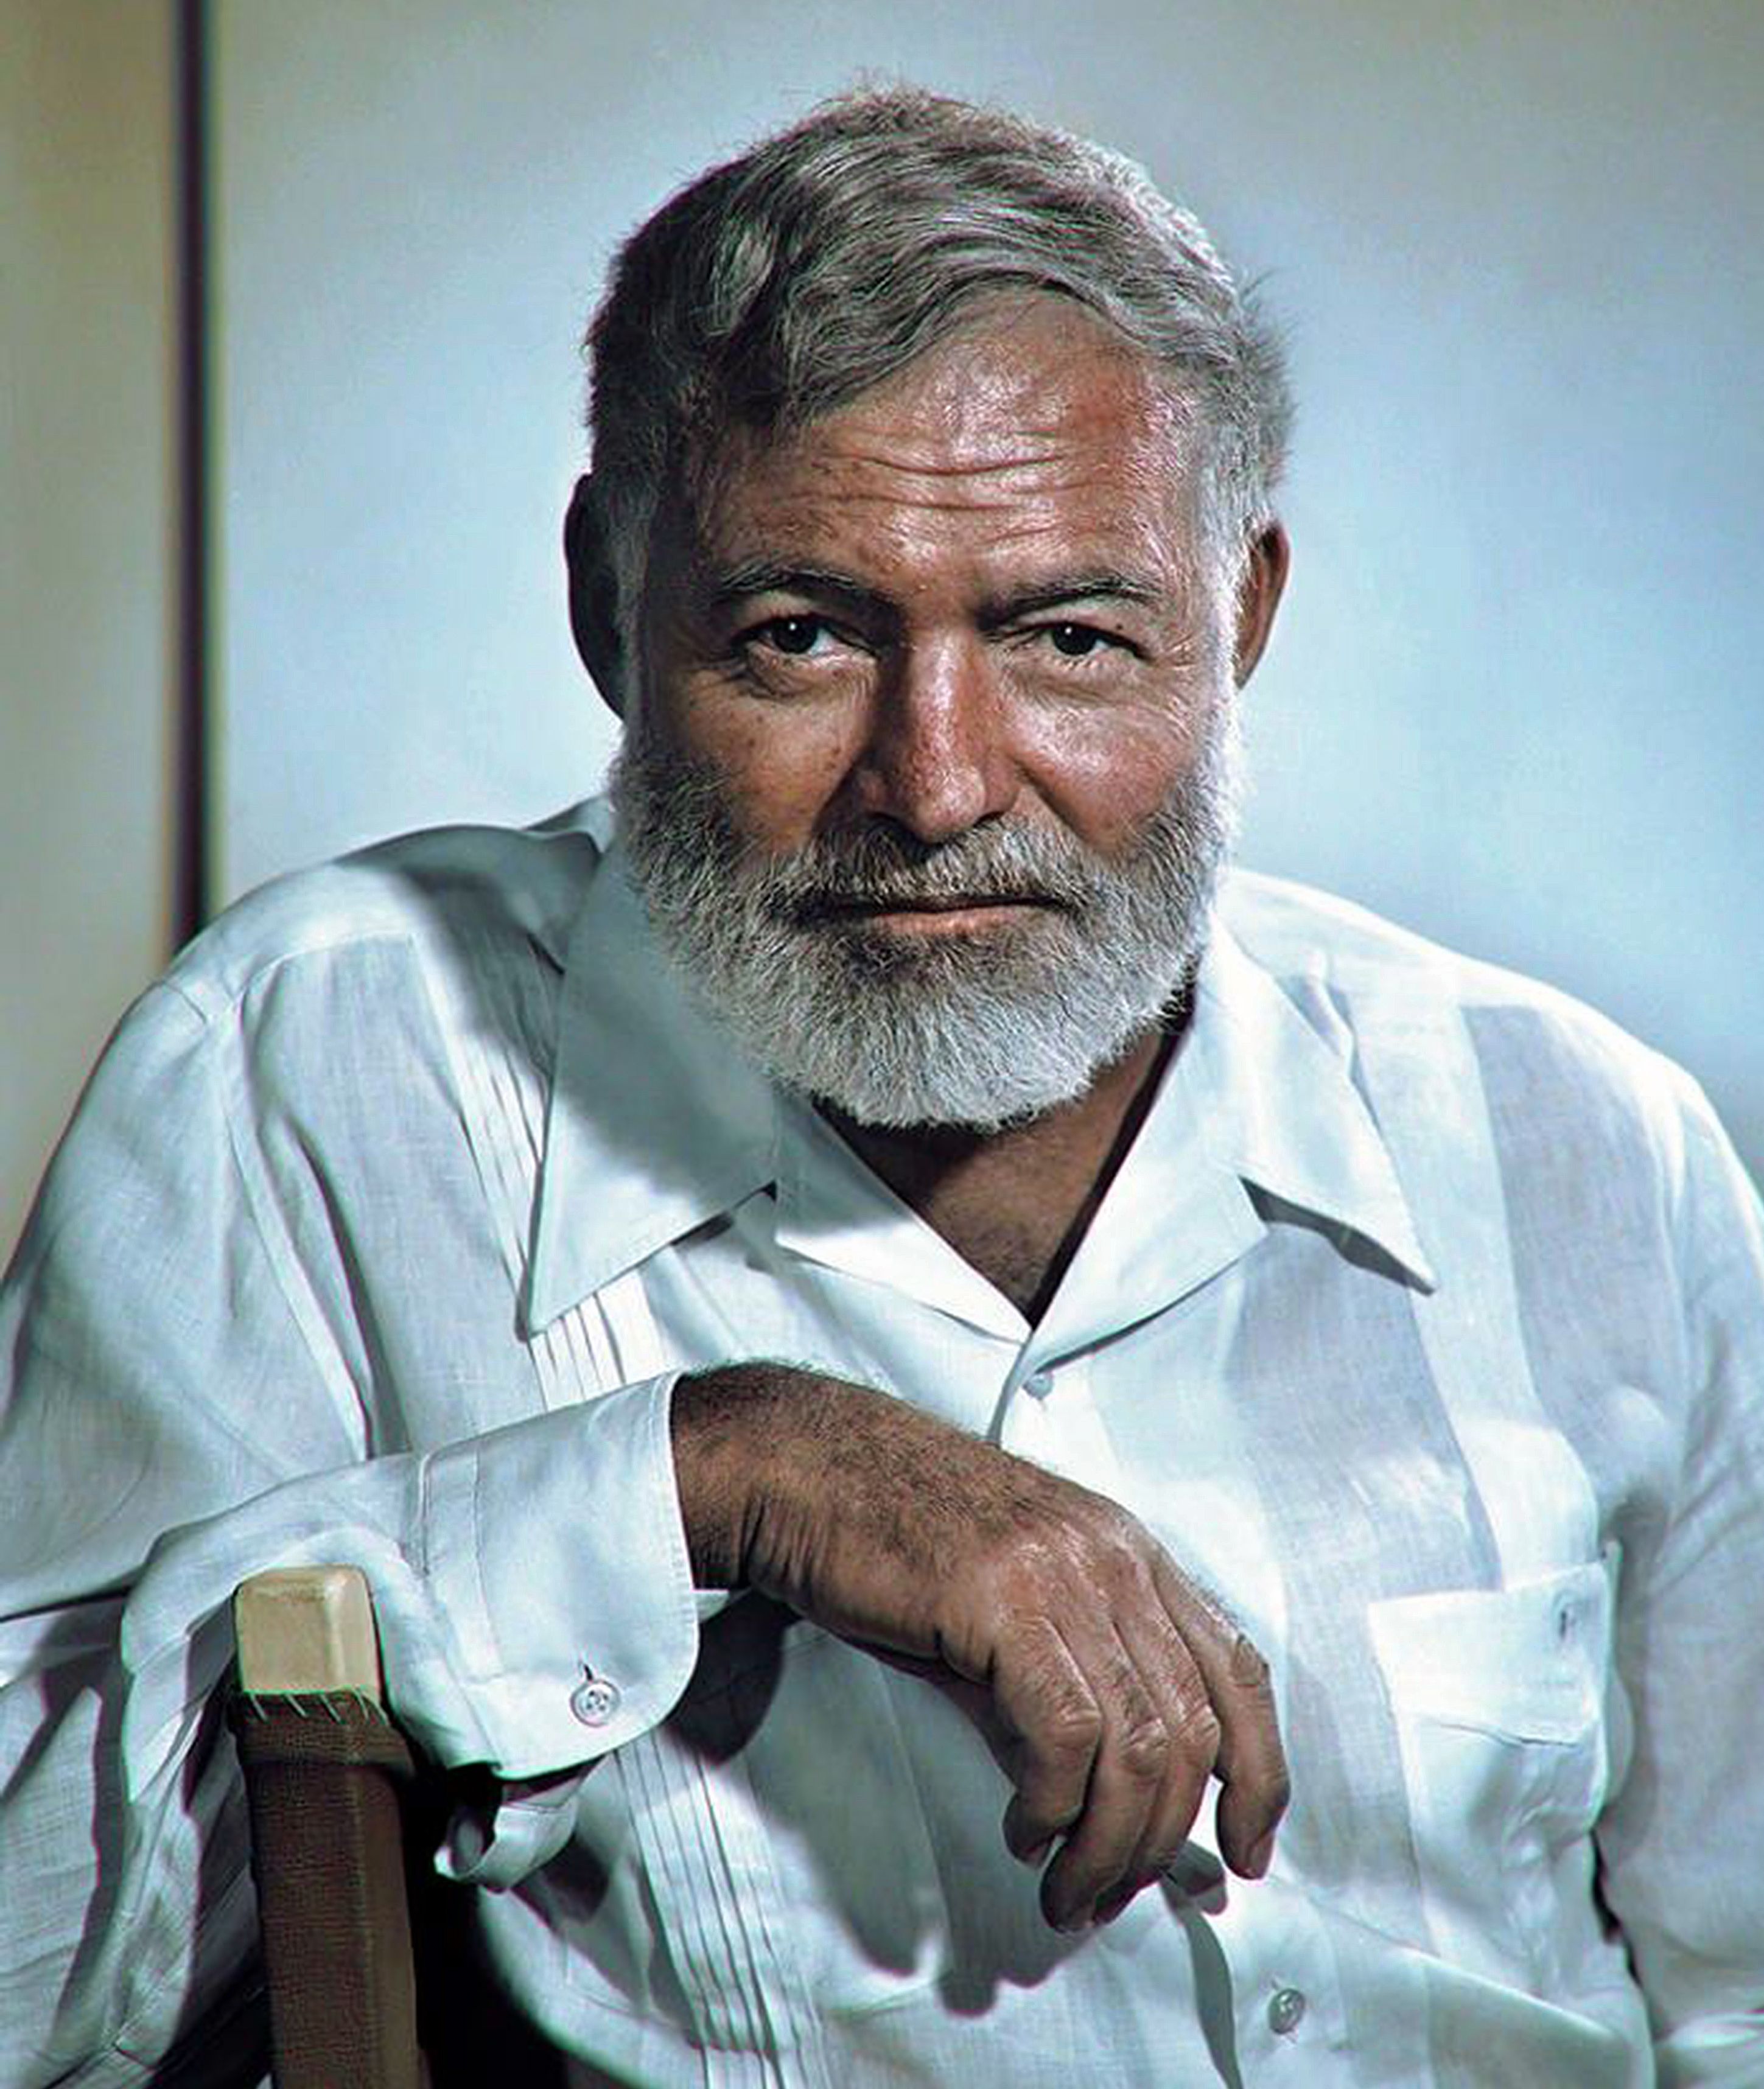 Ernest Hemingway.jpg